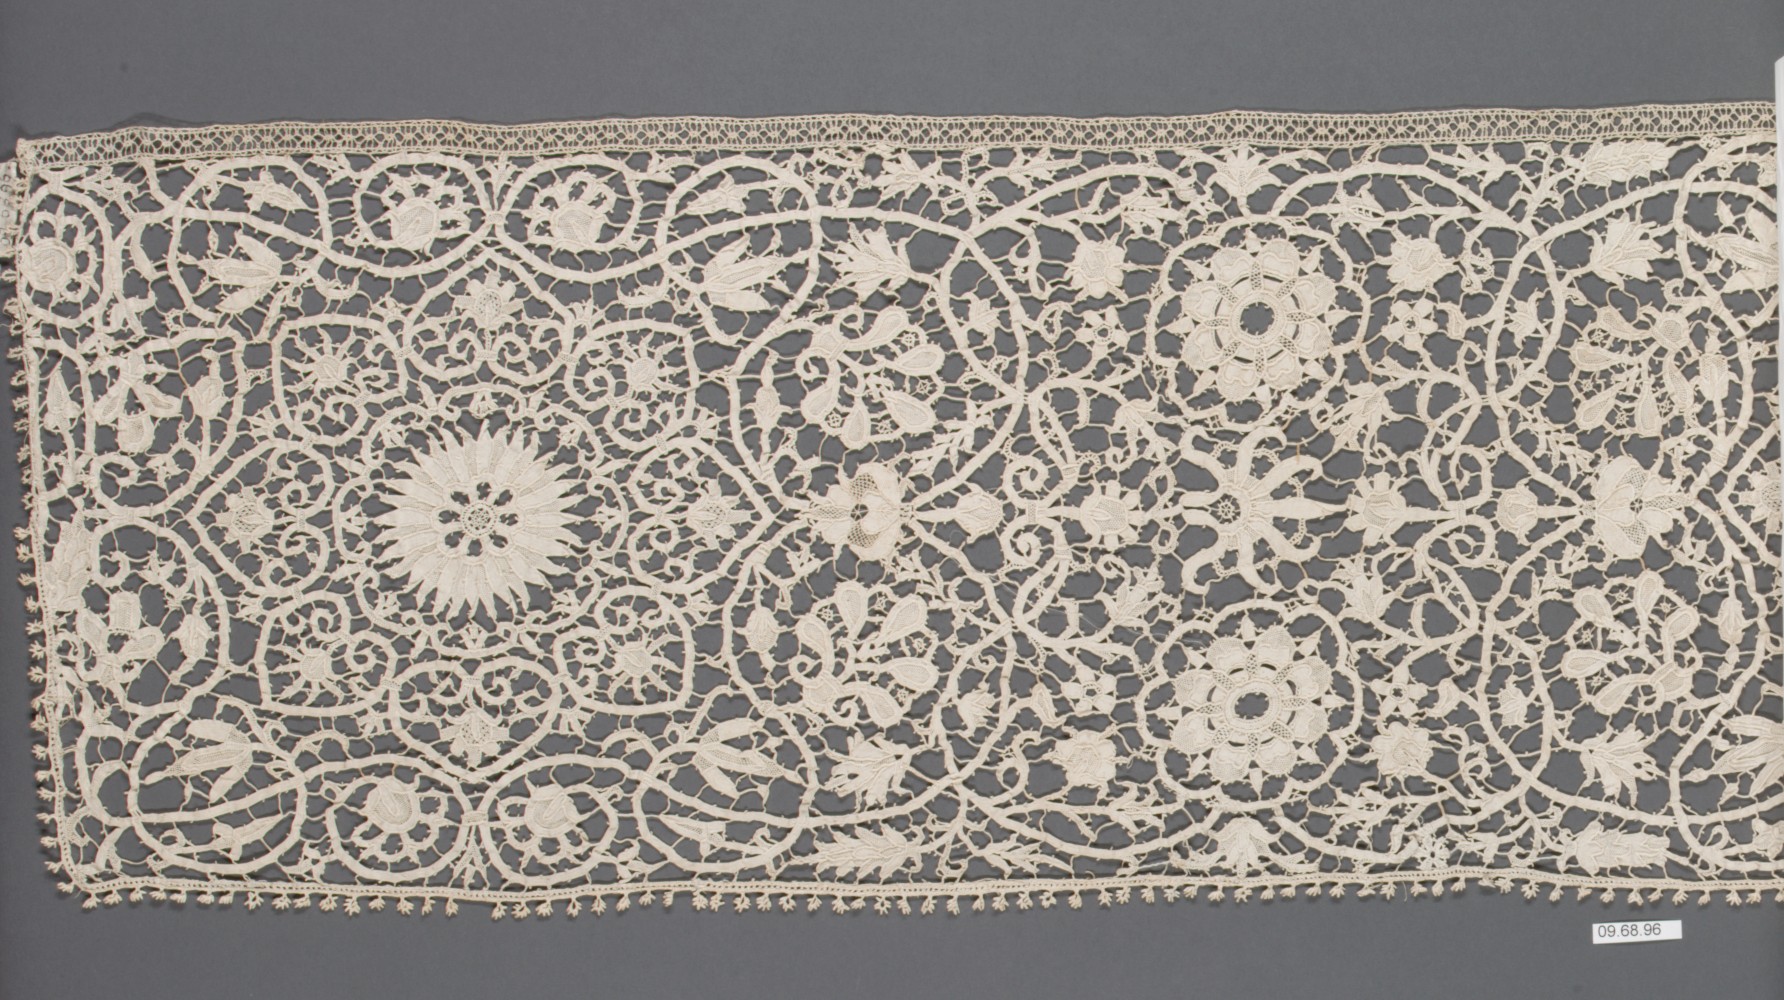 Fragment, Italian, 17th century, Italian, Needle lace, punto in aria, L. 5  x W. 2 1/2 inches, 12.7 x 6.4 cm, Textiles-Laces Stock Photo - Alamy